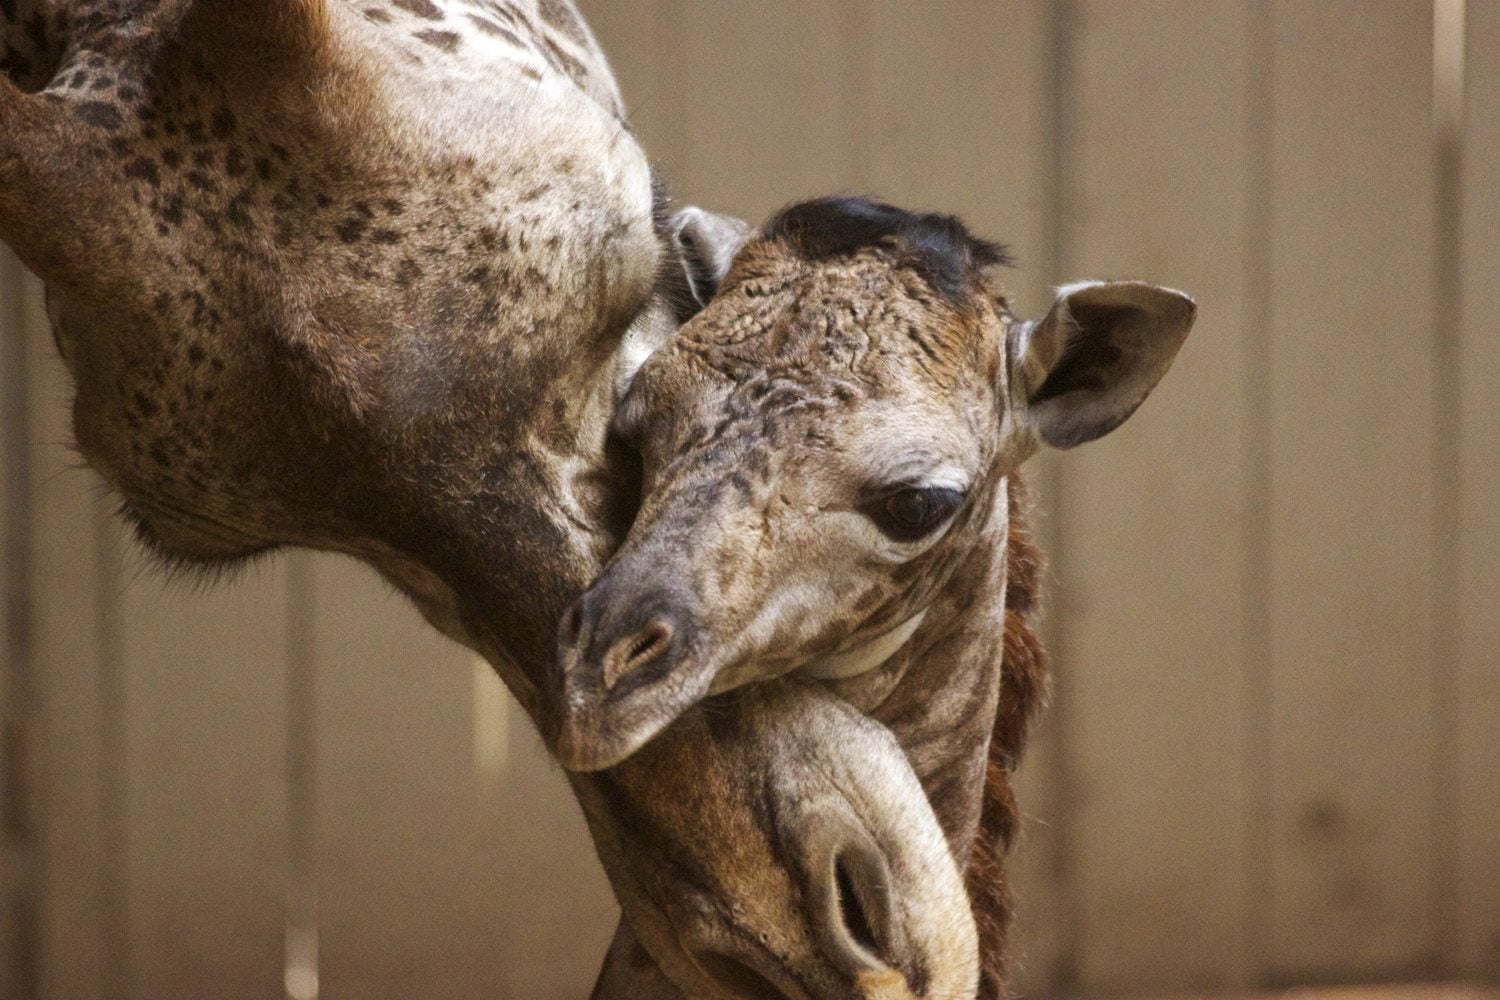 A newborn baby giraffe and its mother, Audrey, are seen Monday at the Santa Barbara Zoo in Santa Barbara, Calif. The unnamed Masai giraffe was born Saturday.